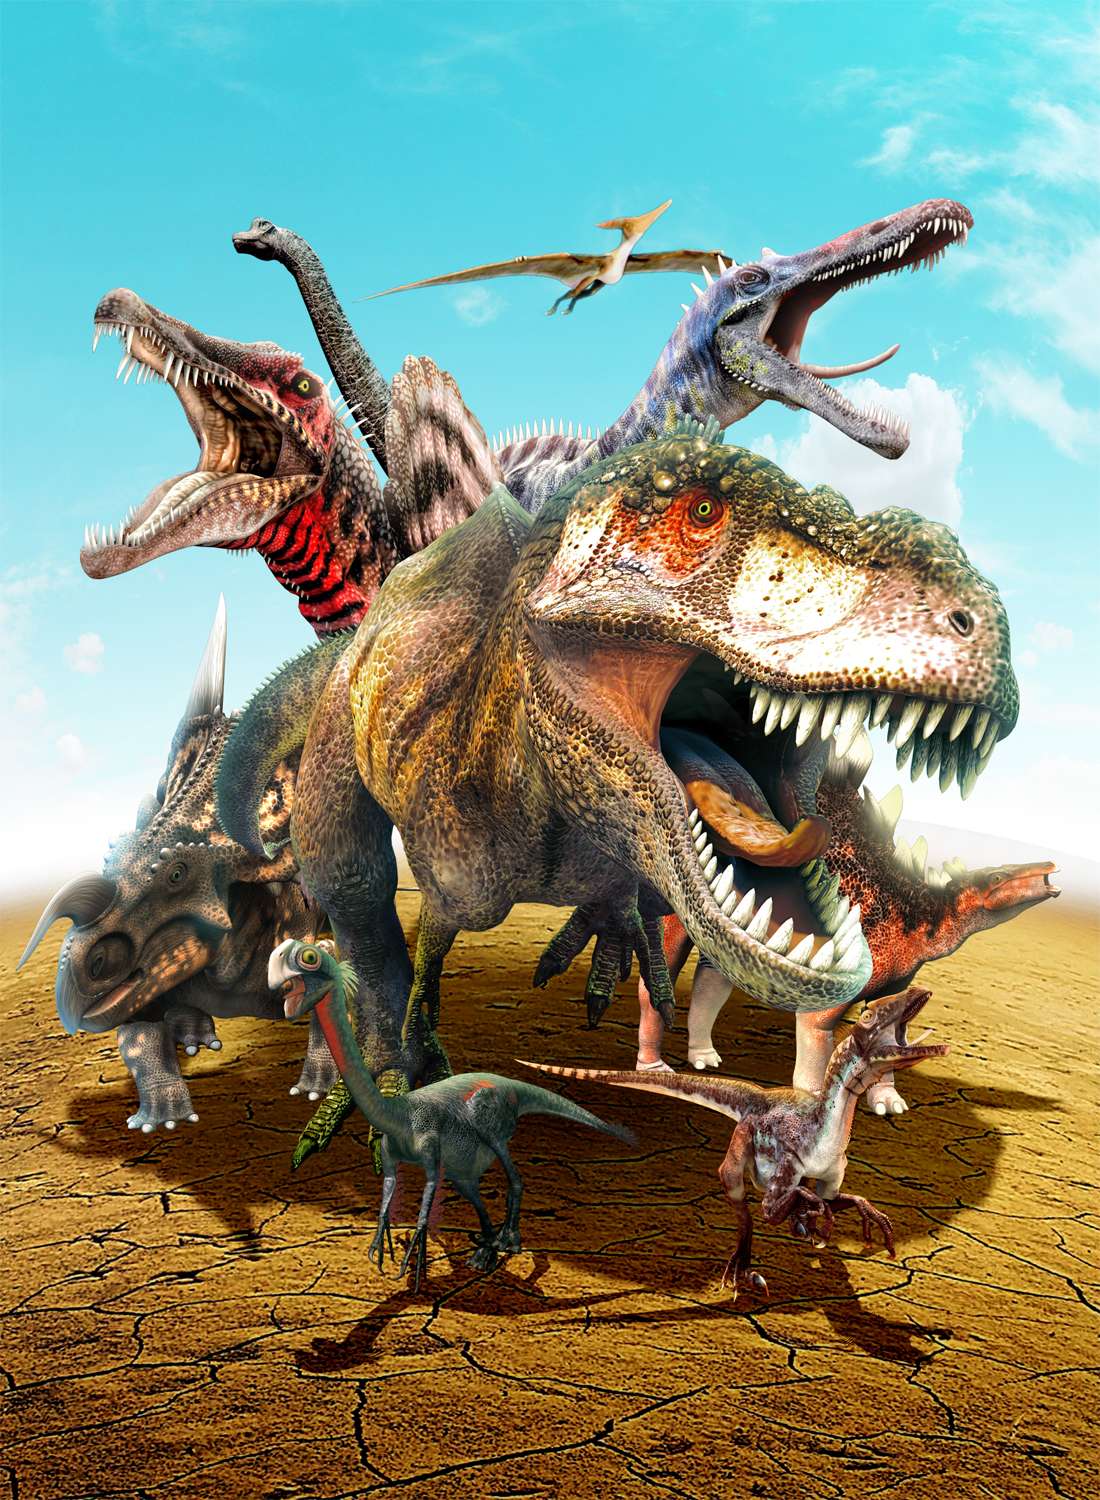 Dinosaur battle. Сражение динозавров. Битва динозавров. Бой динозавров. Динозавр 3д.